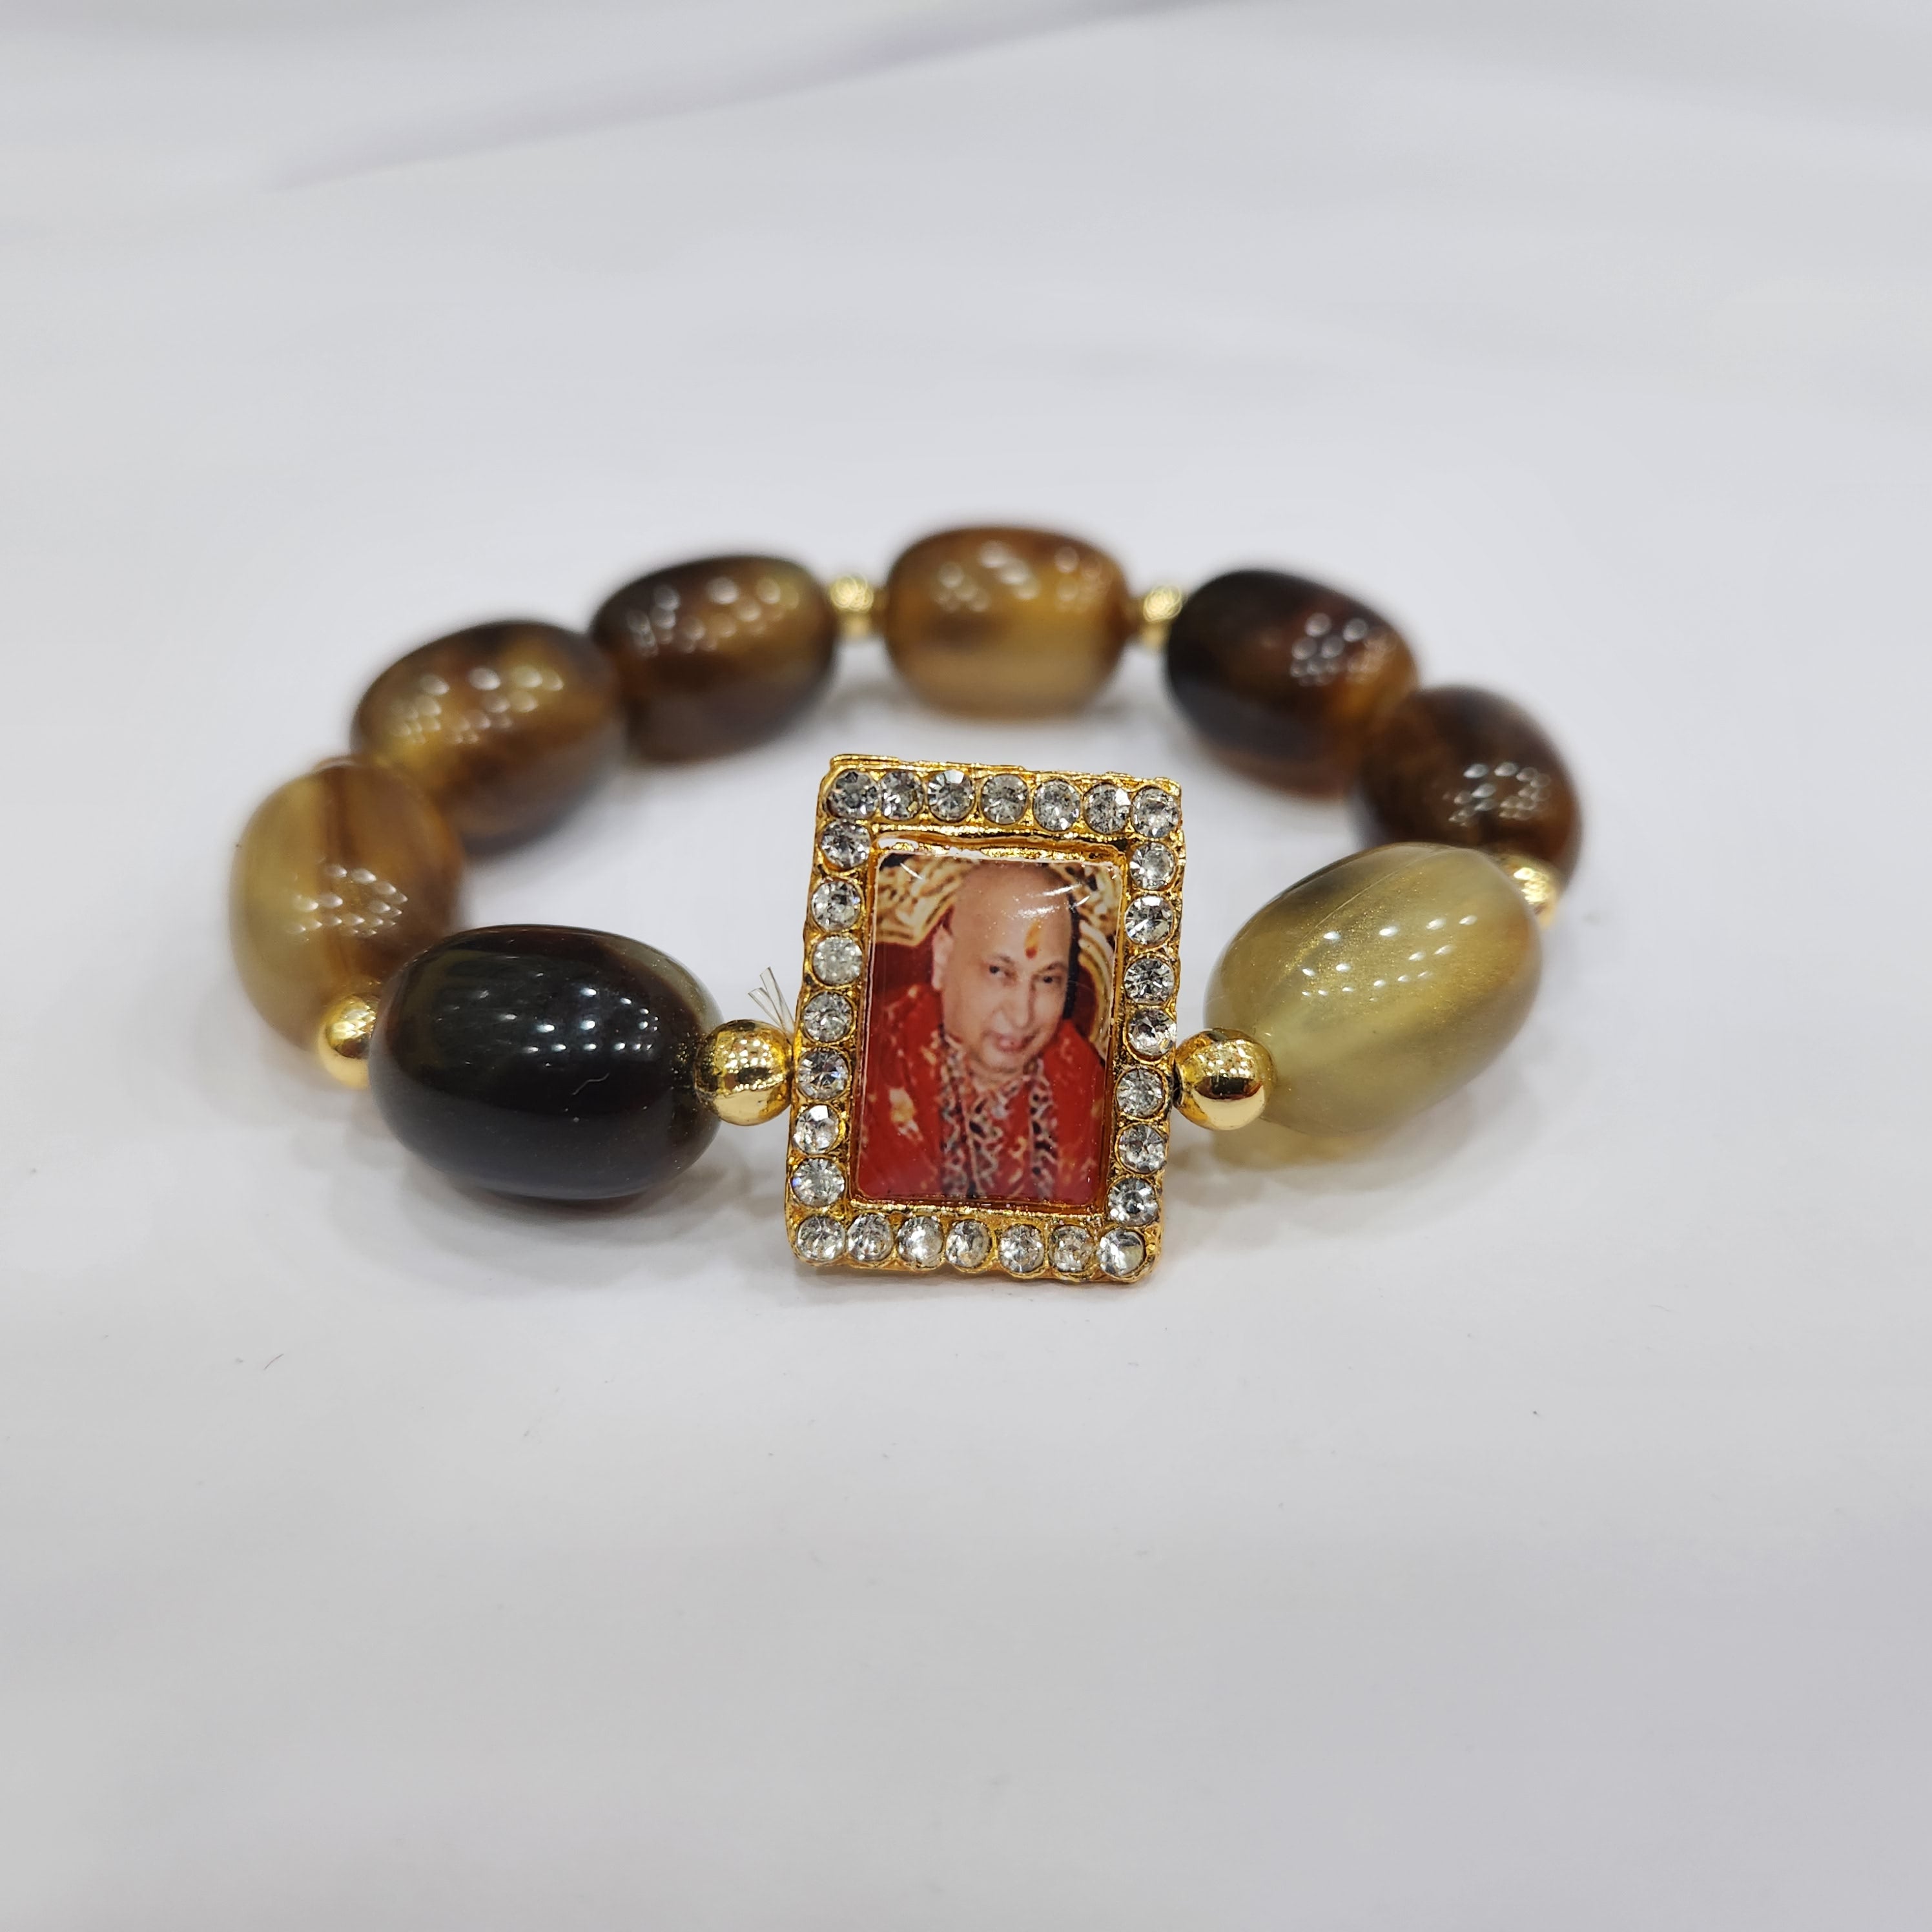 Multicolor Glass Beads Jai Guru Ji Bracelet at Rs 50/piece in New Delhi |  ID: 2853451847791